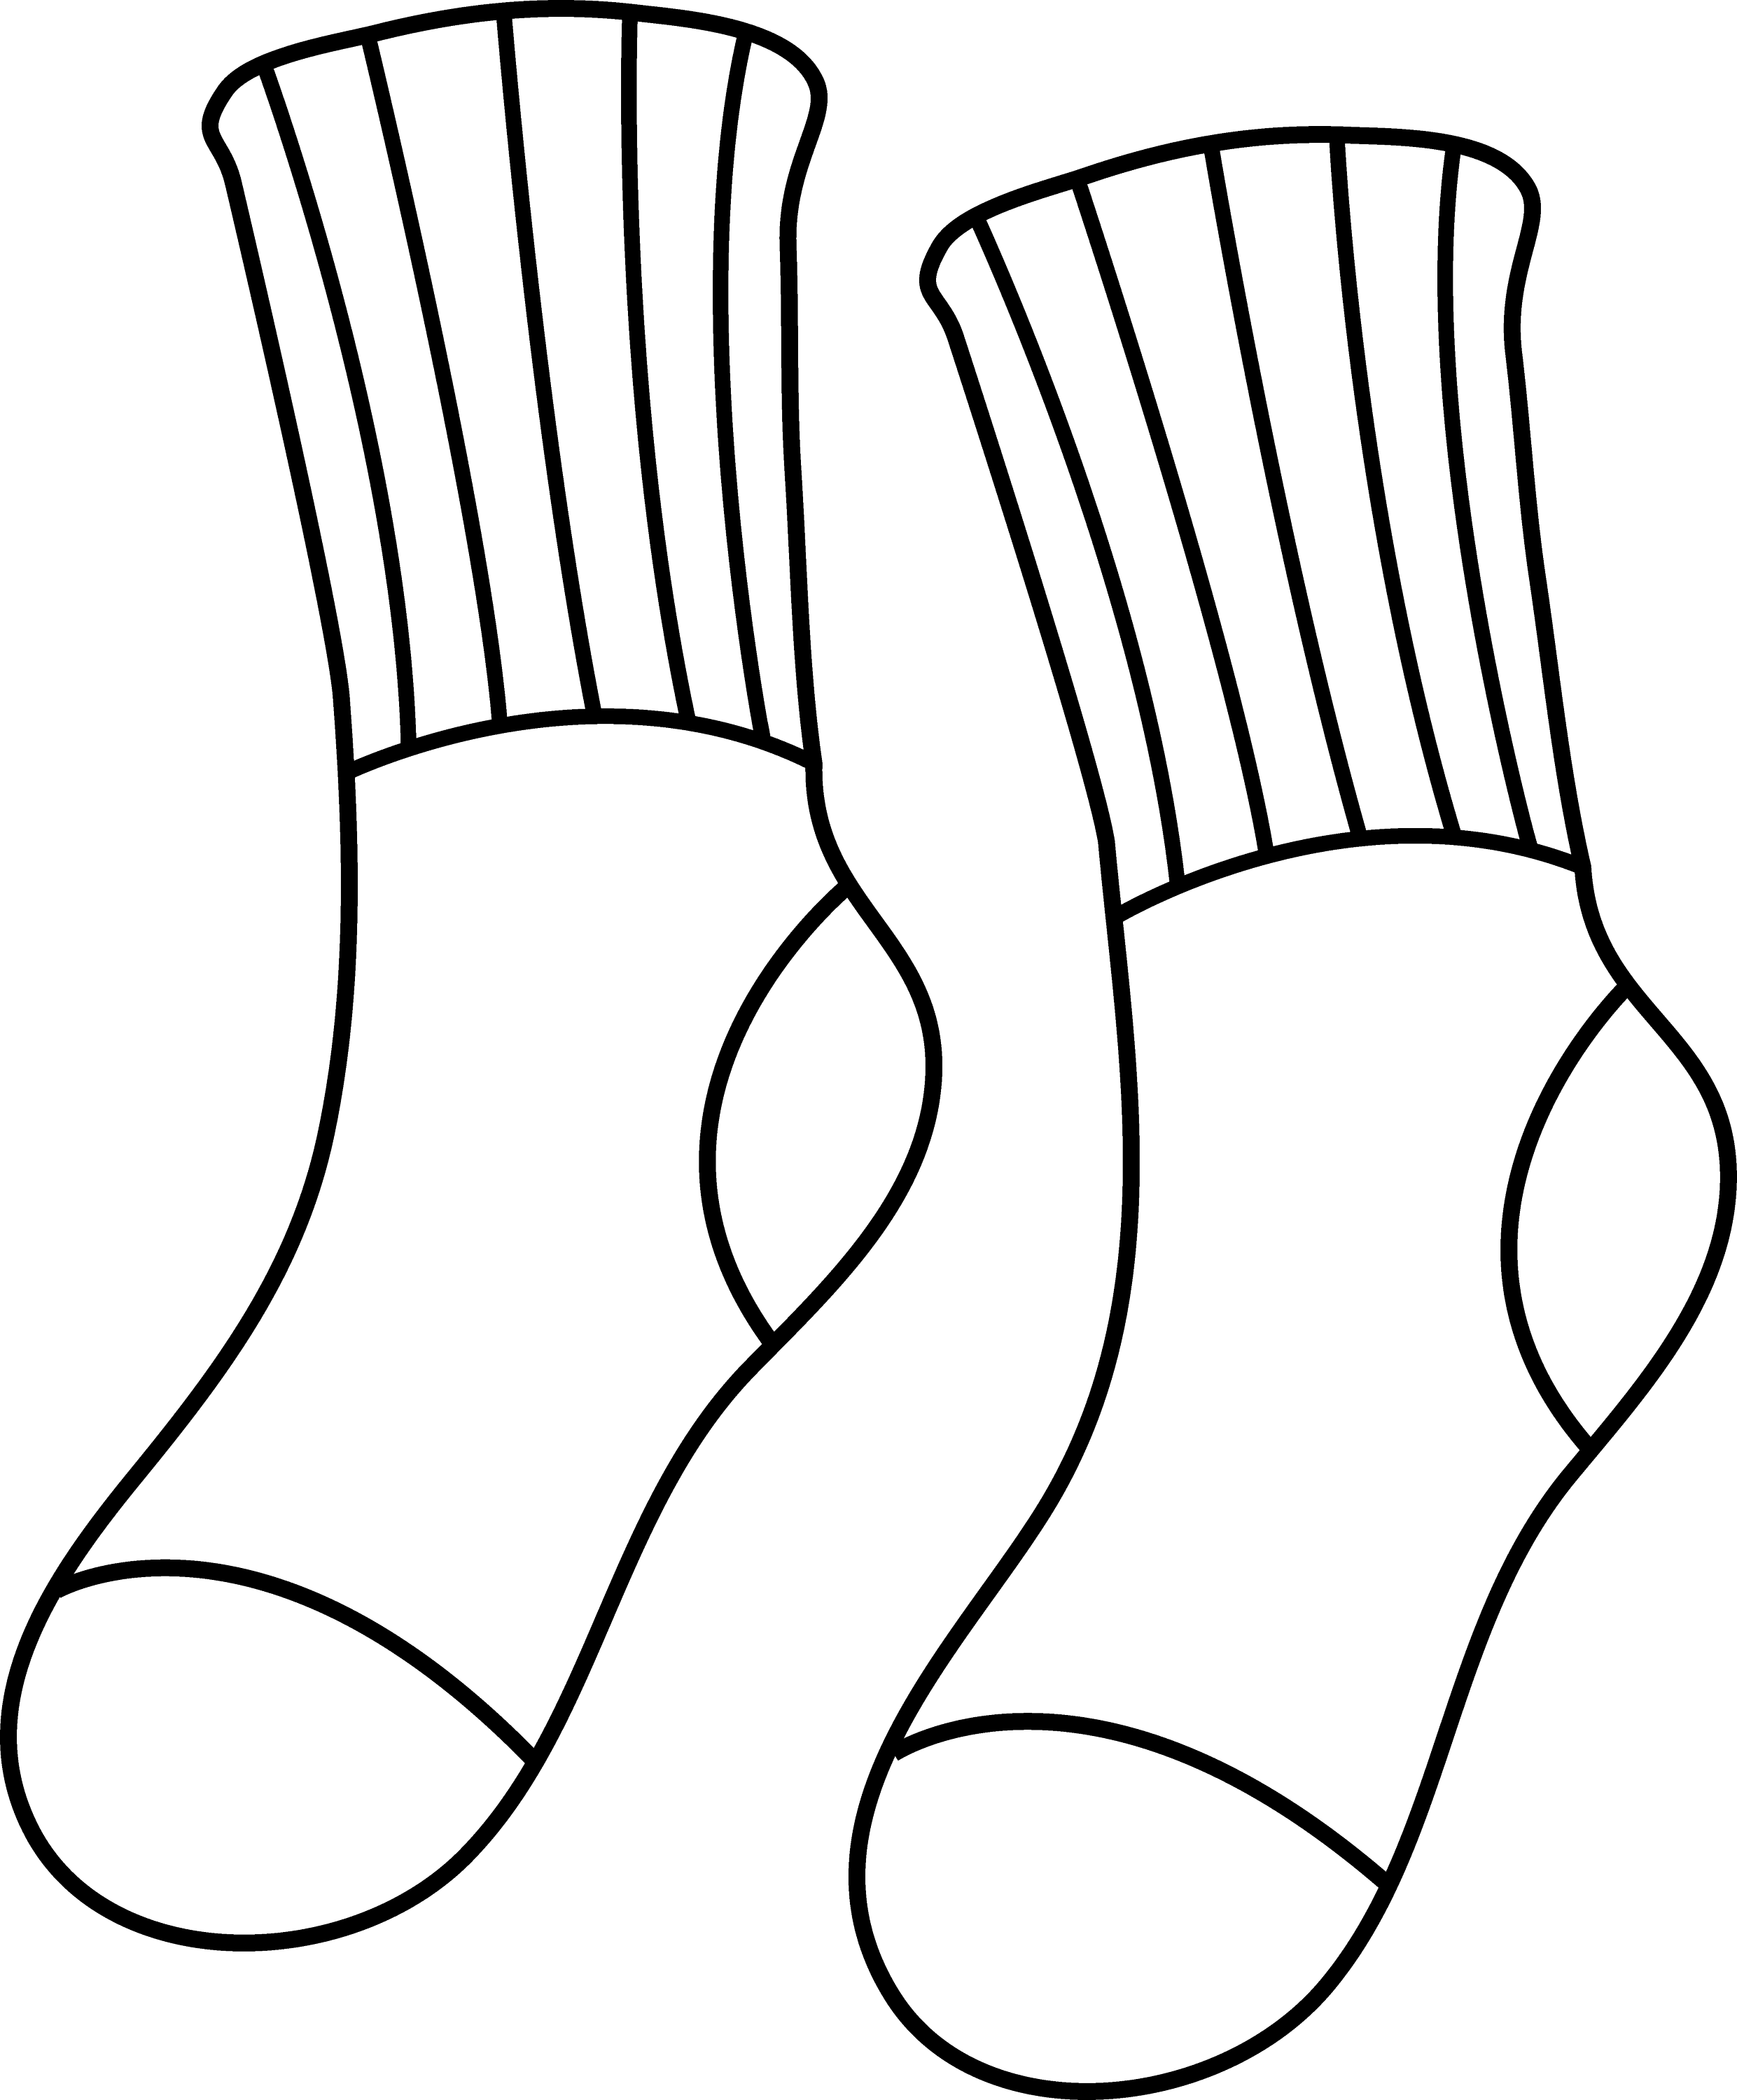 Pair of Socks Line Art Free Clip Art